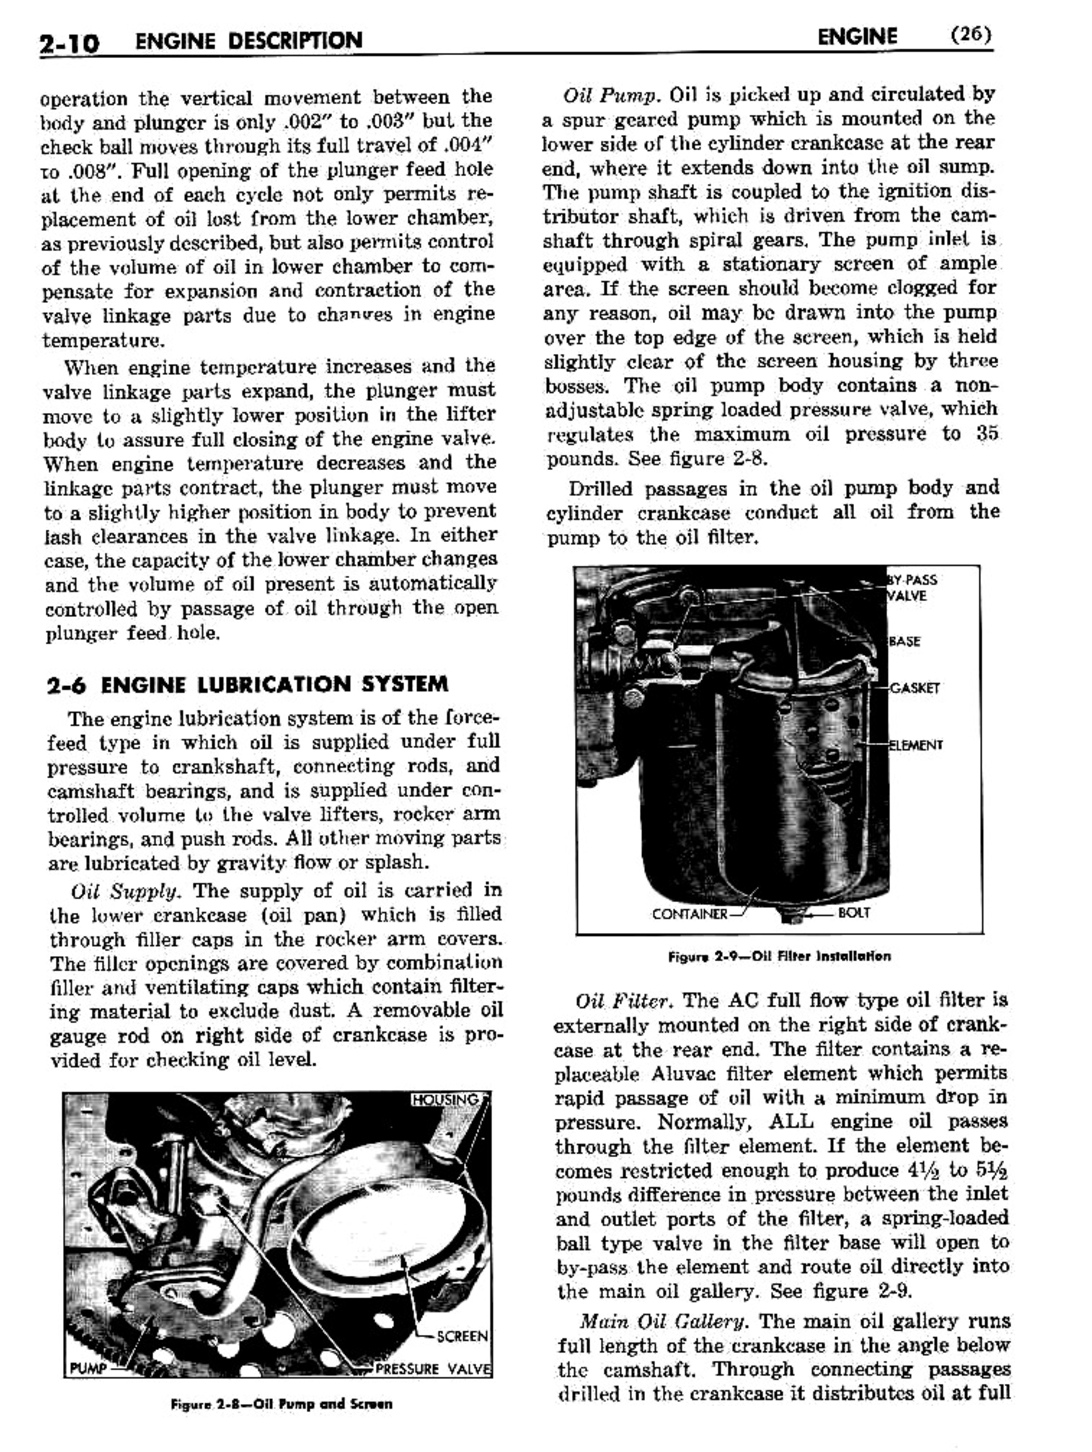 n_03 1956 Buick Shop Manual - Engine-010-010.jpg